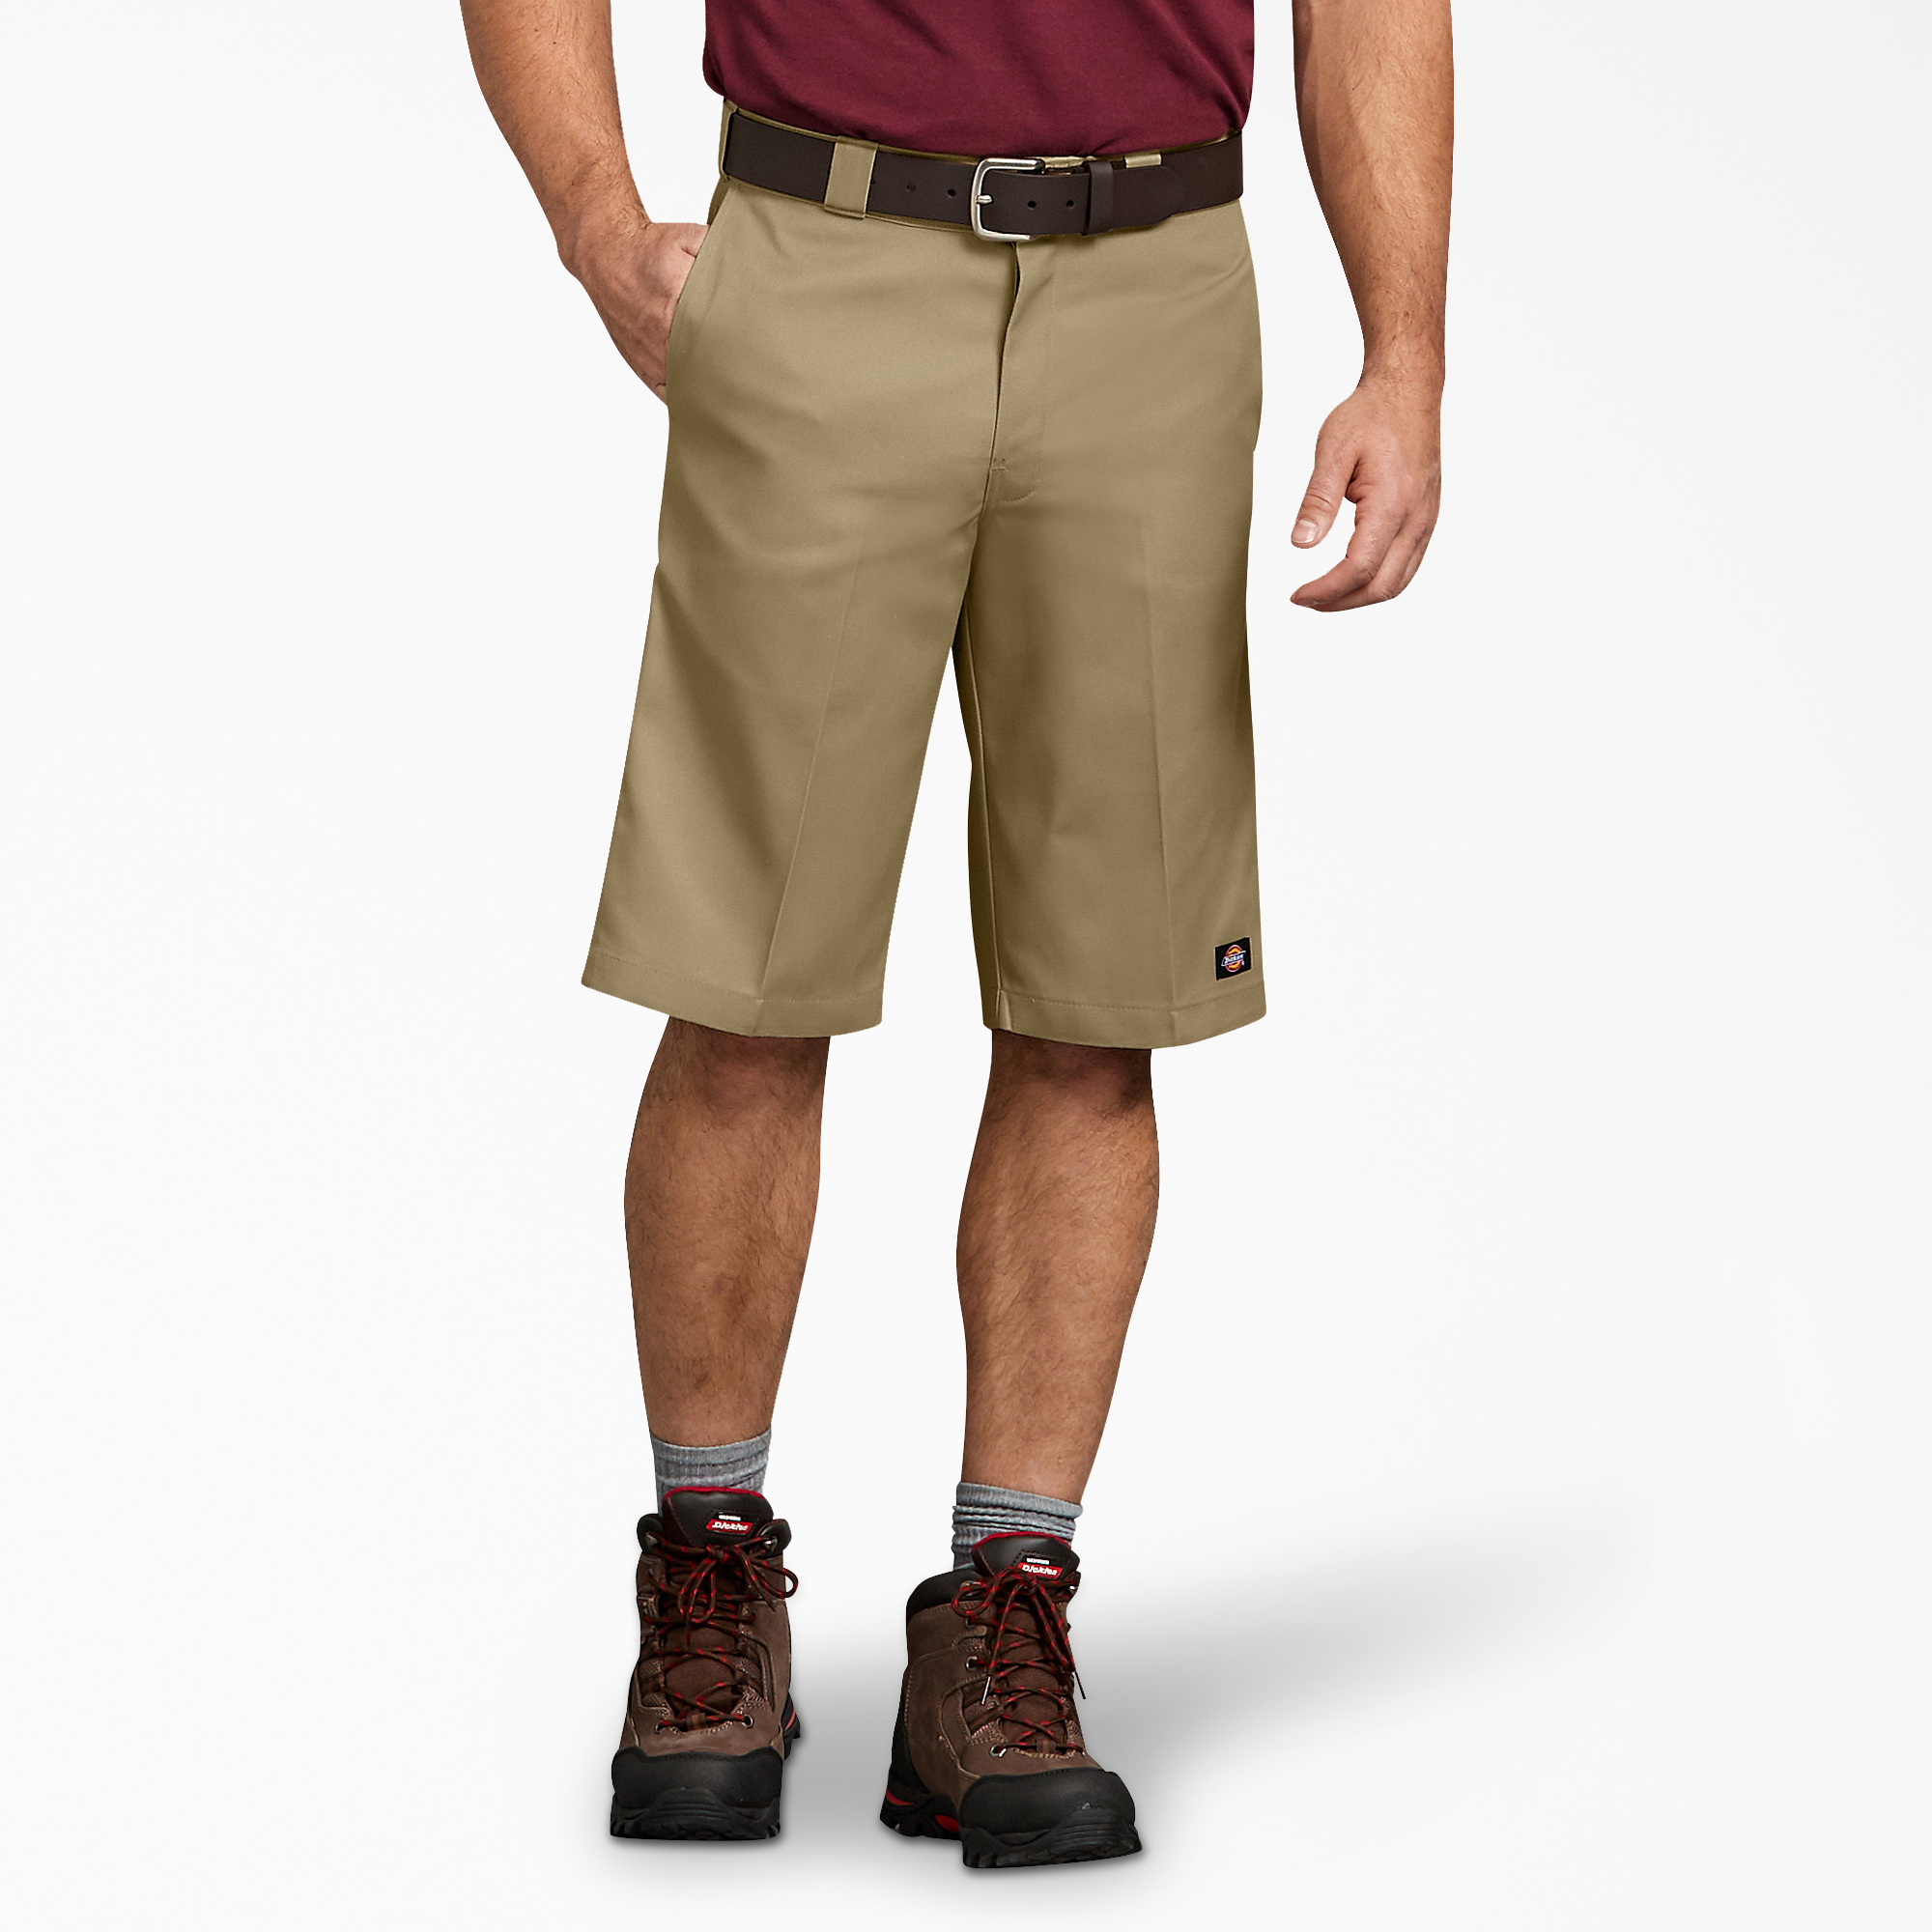 13" Relaxed Fit Multi-Pocket Work Shorts - Military Khaki (KH)